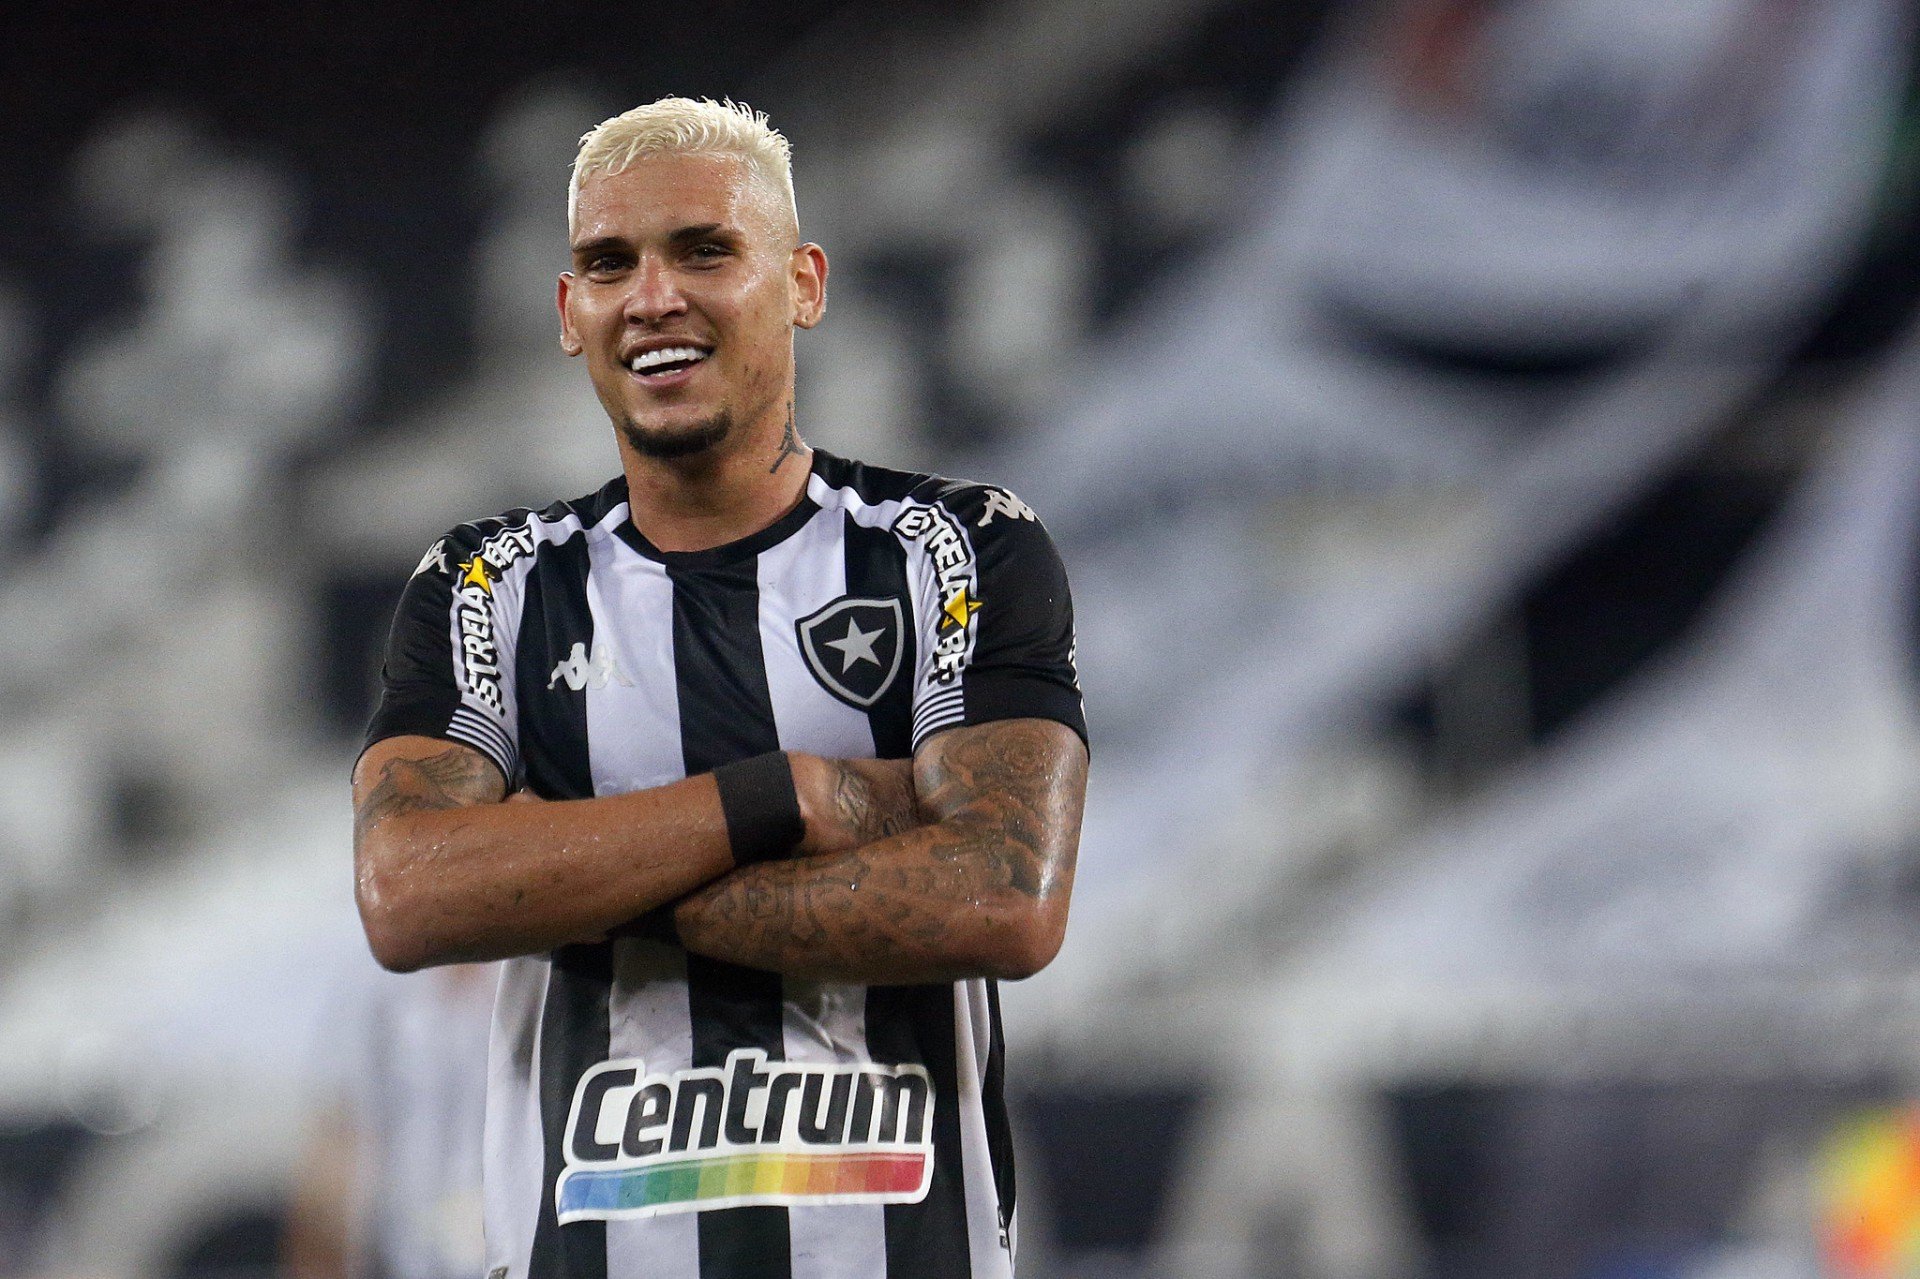 Rafael Navarro comemora boa fase no Botafogo e destaca: ‘Muito feliz’